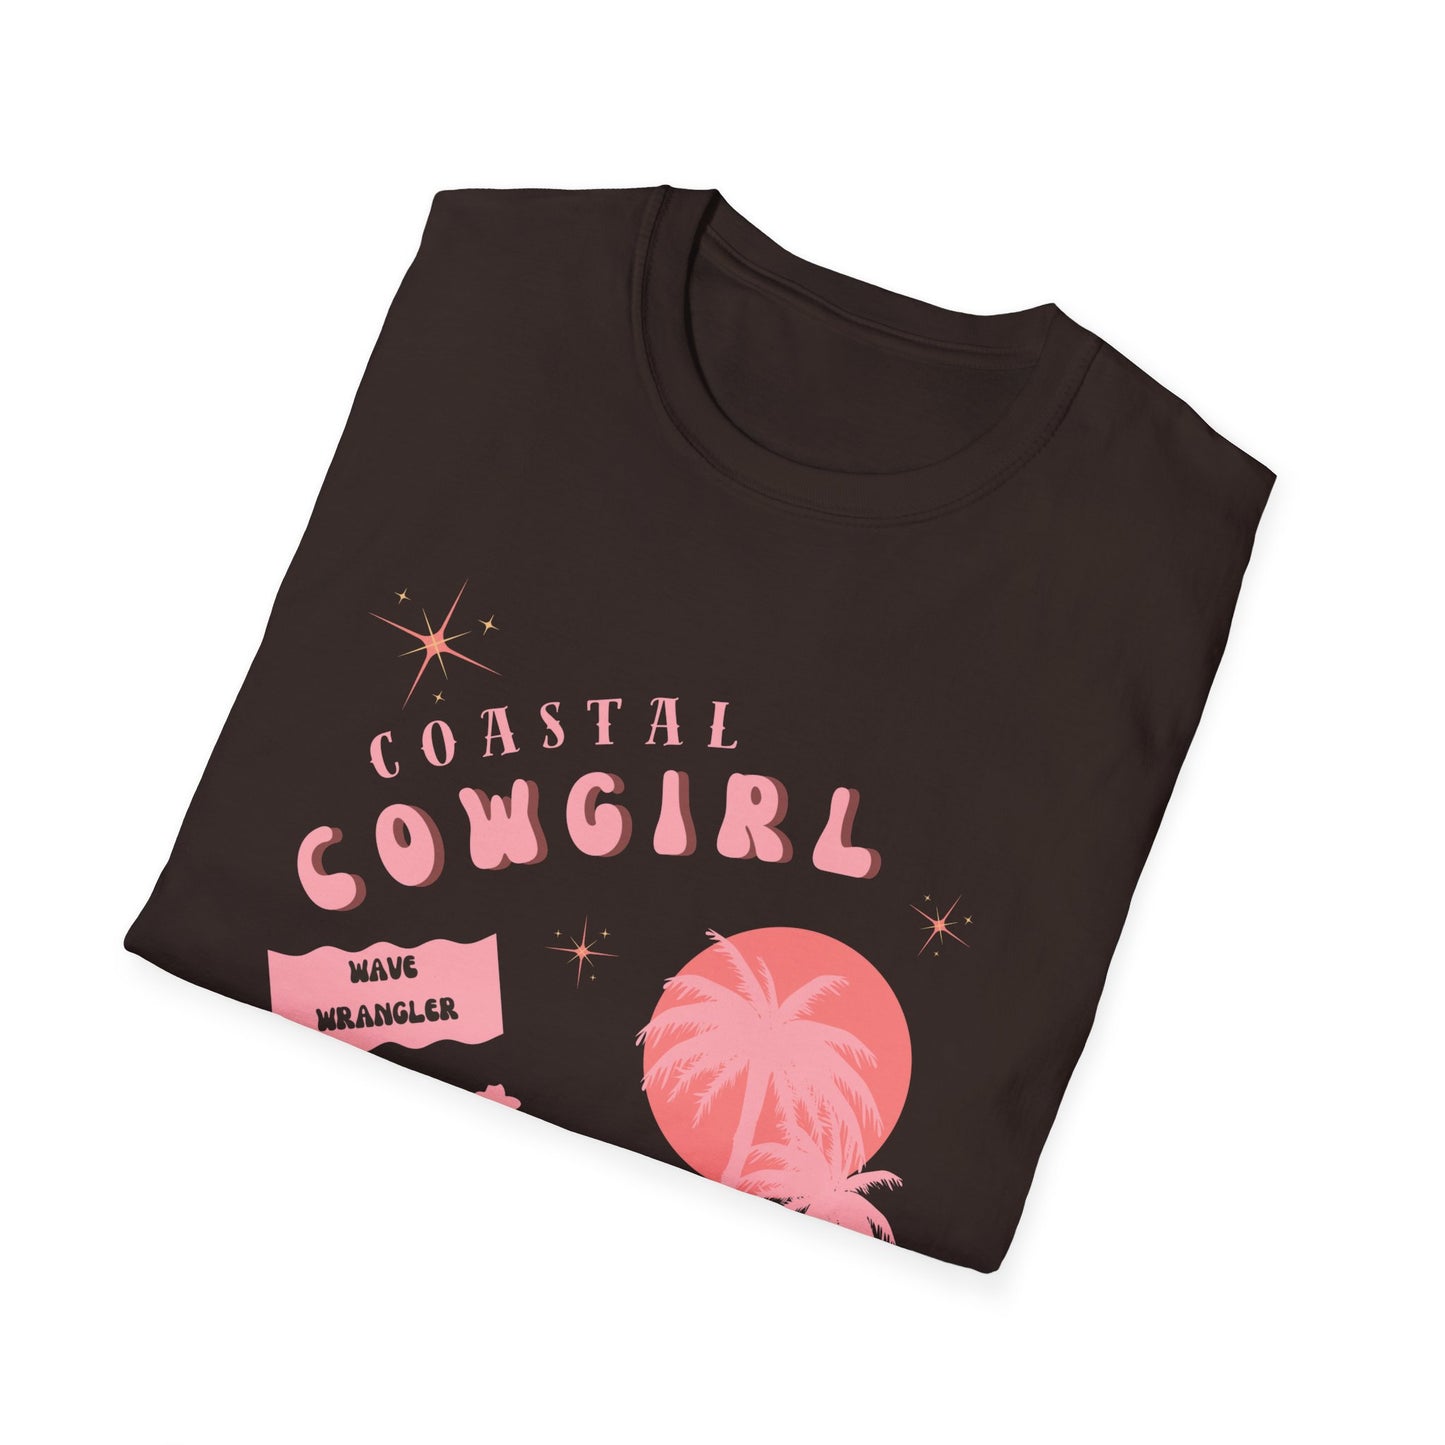 Coastal Cowgirl // BASIC TEE